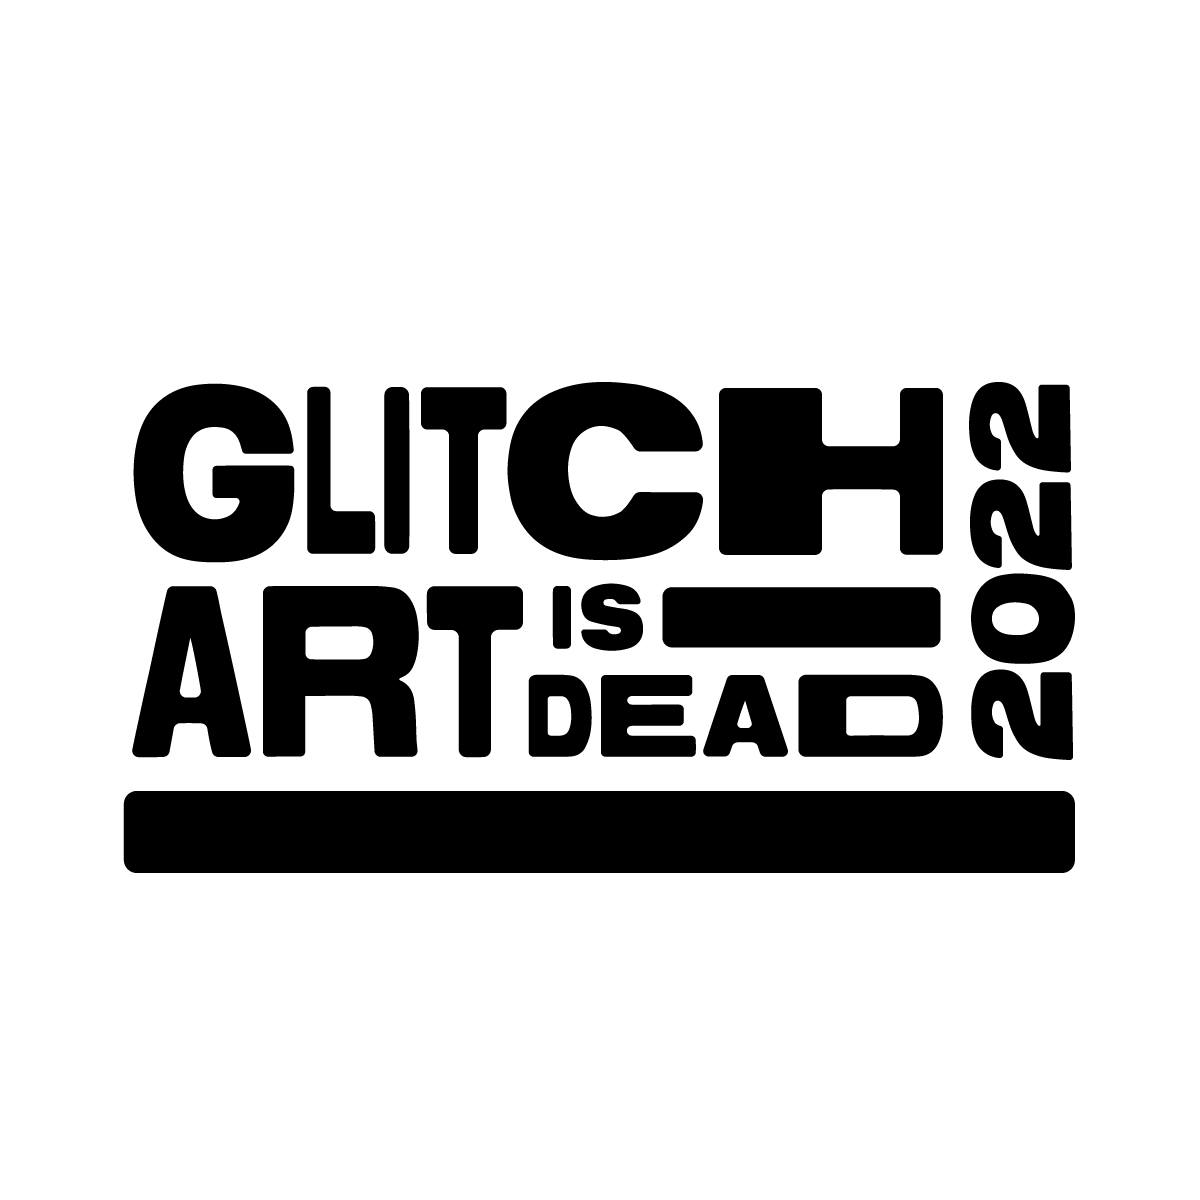 Glitch art - Wikipedia